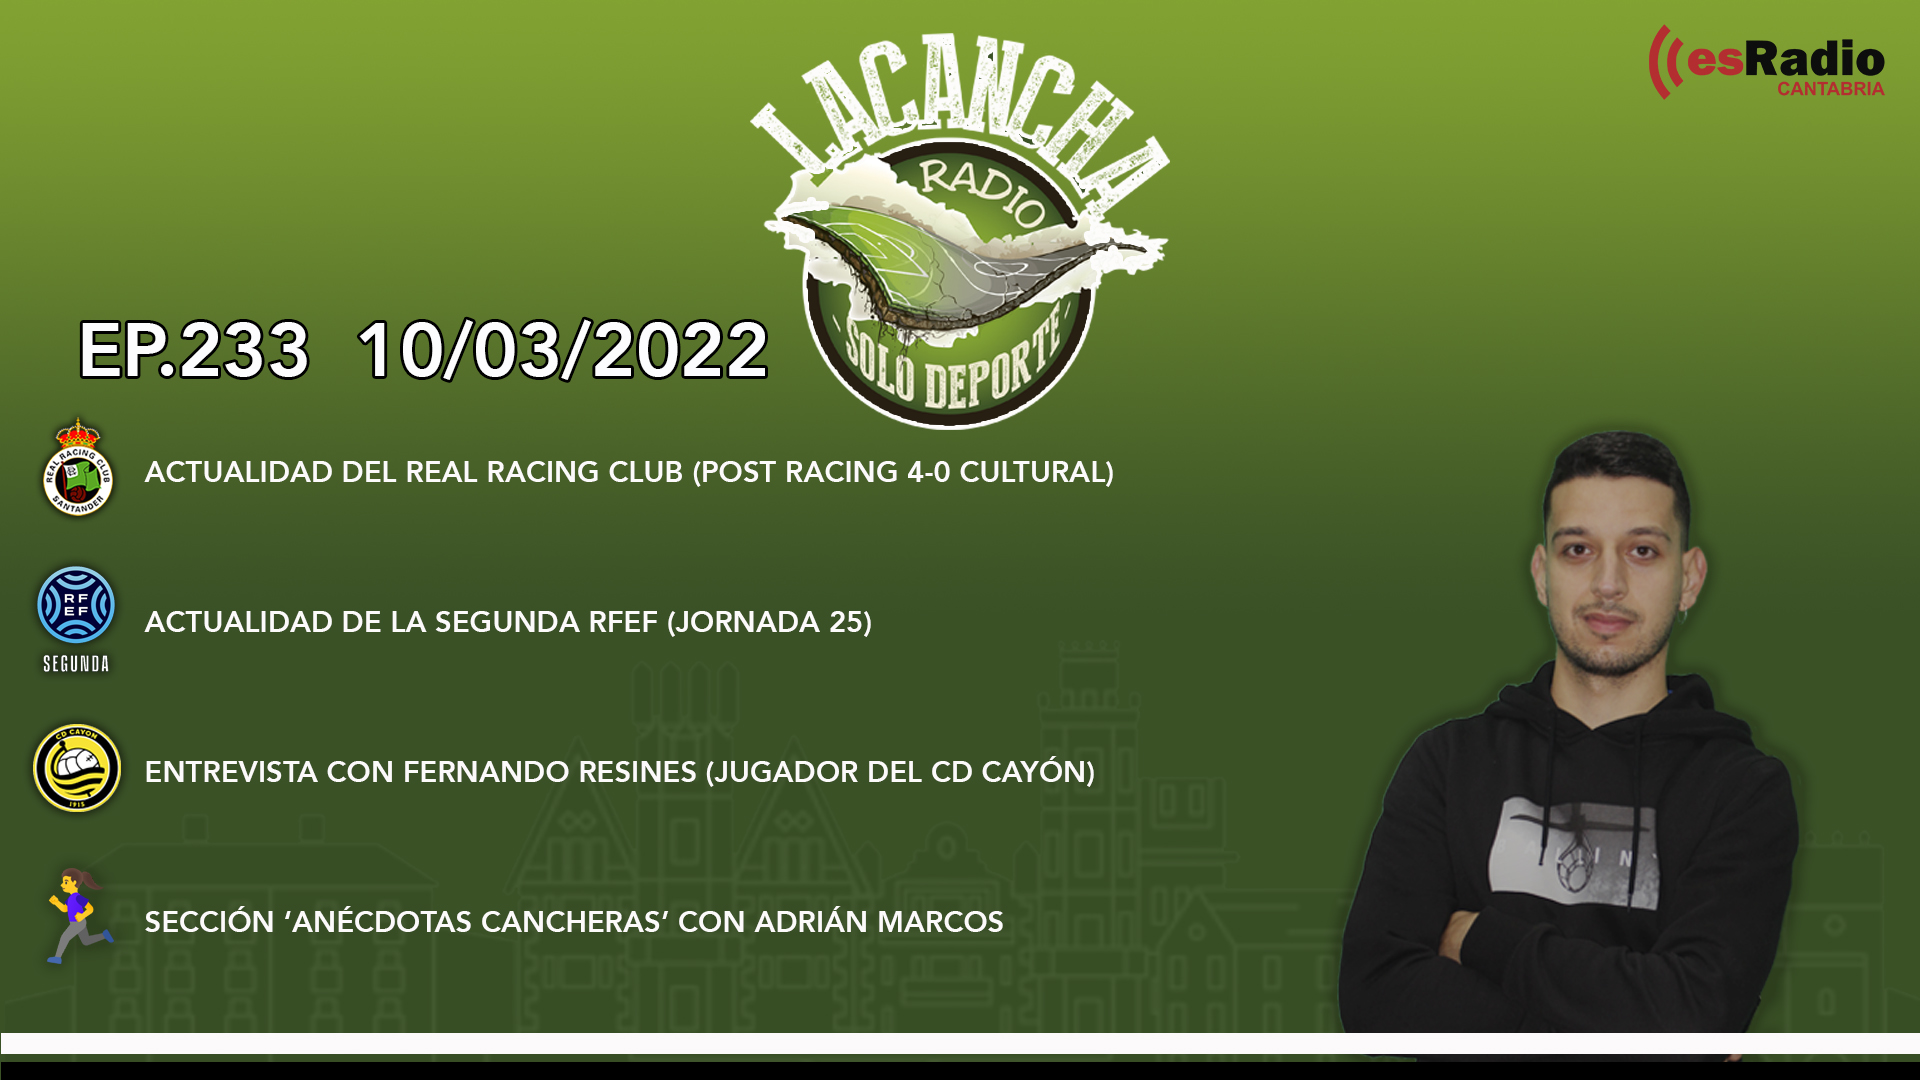 La Cancha Ep. 233 (10/03/2022)